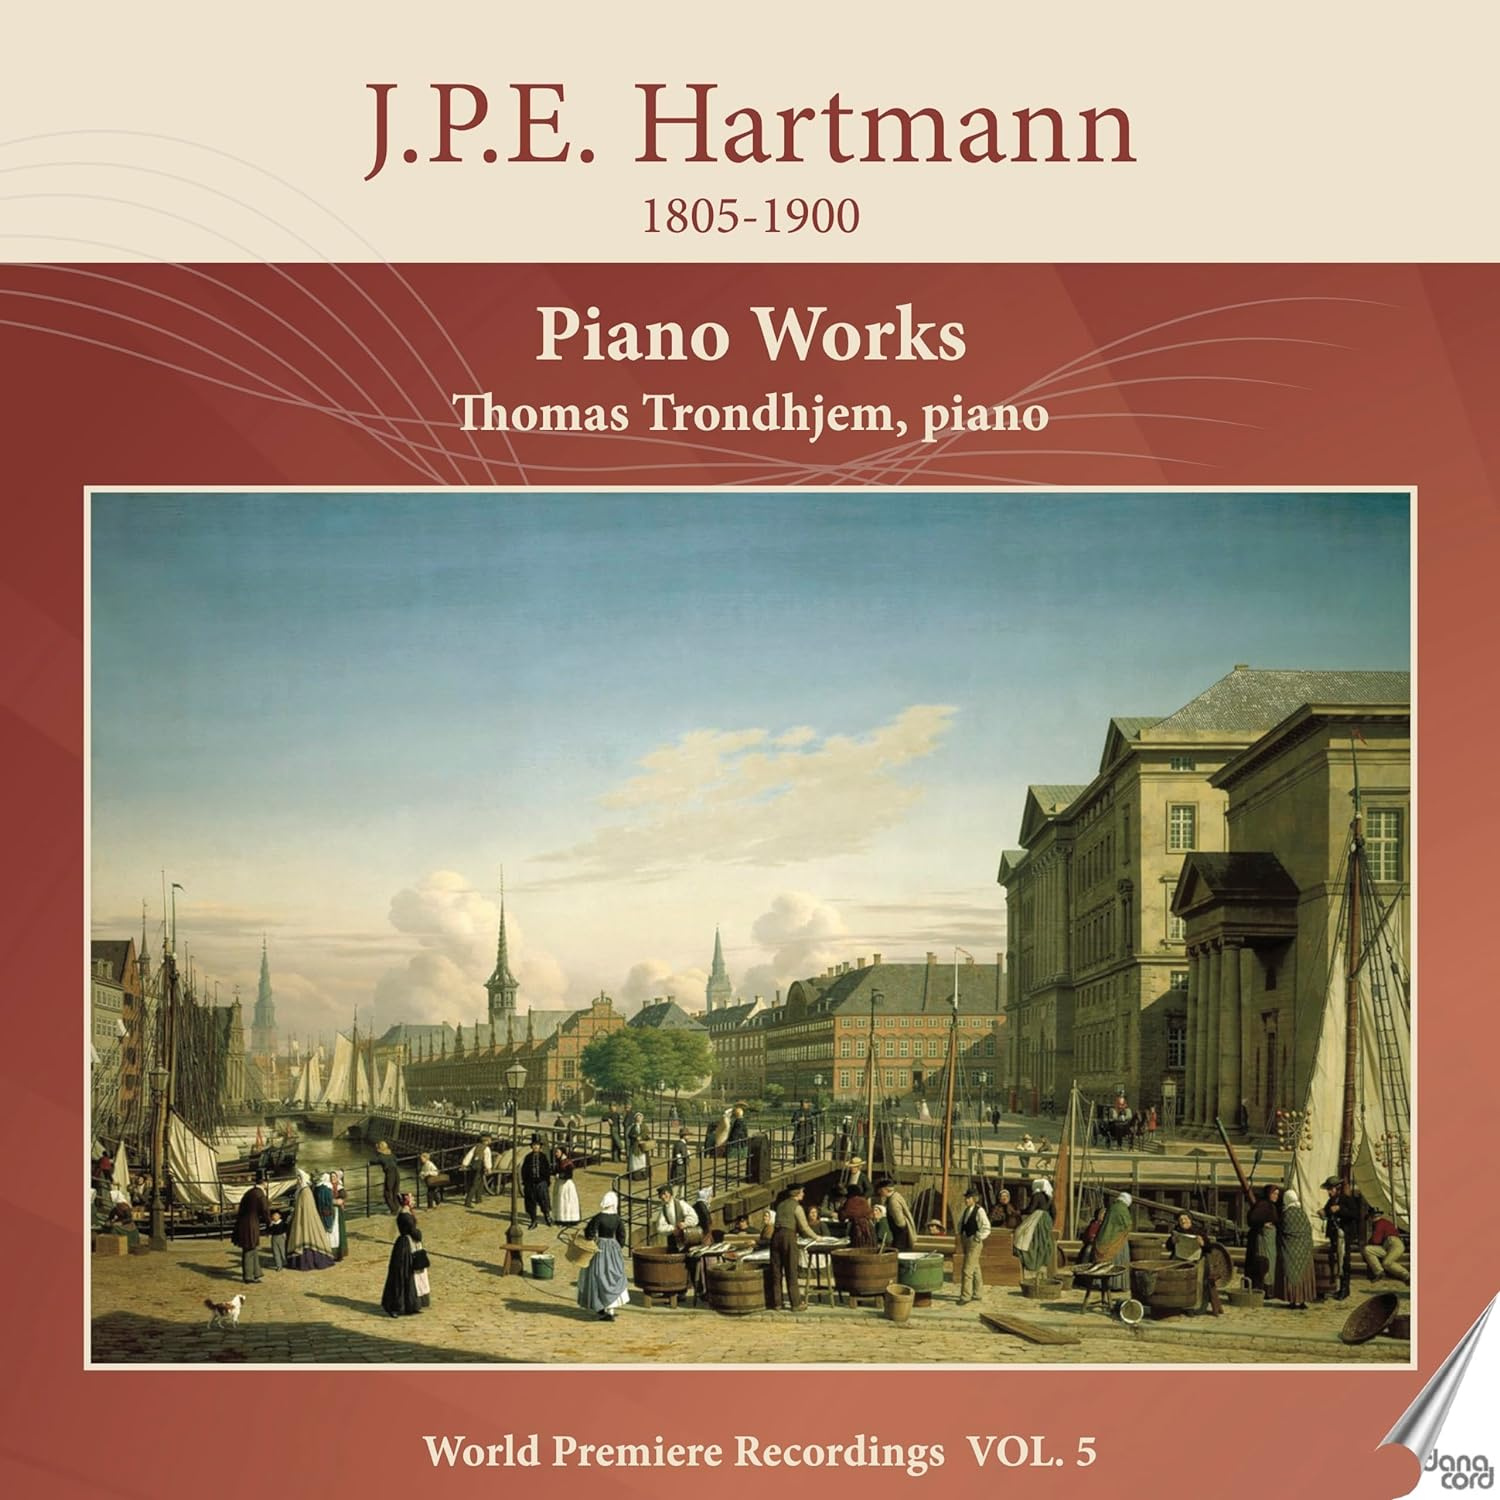 J.P.E. HARTMANN: PIANO WORKS, VOL. 5